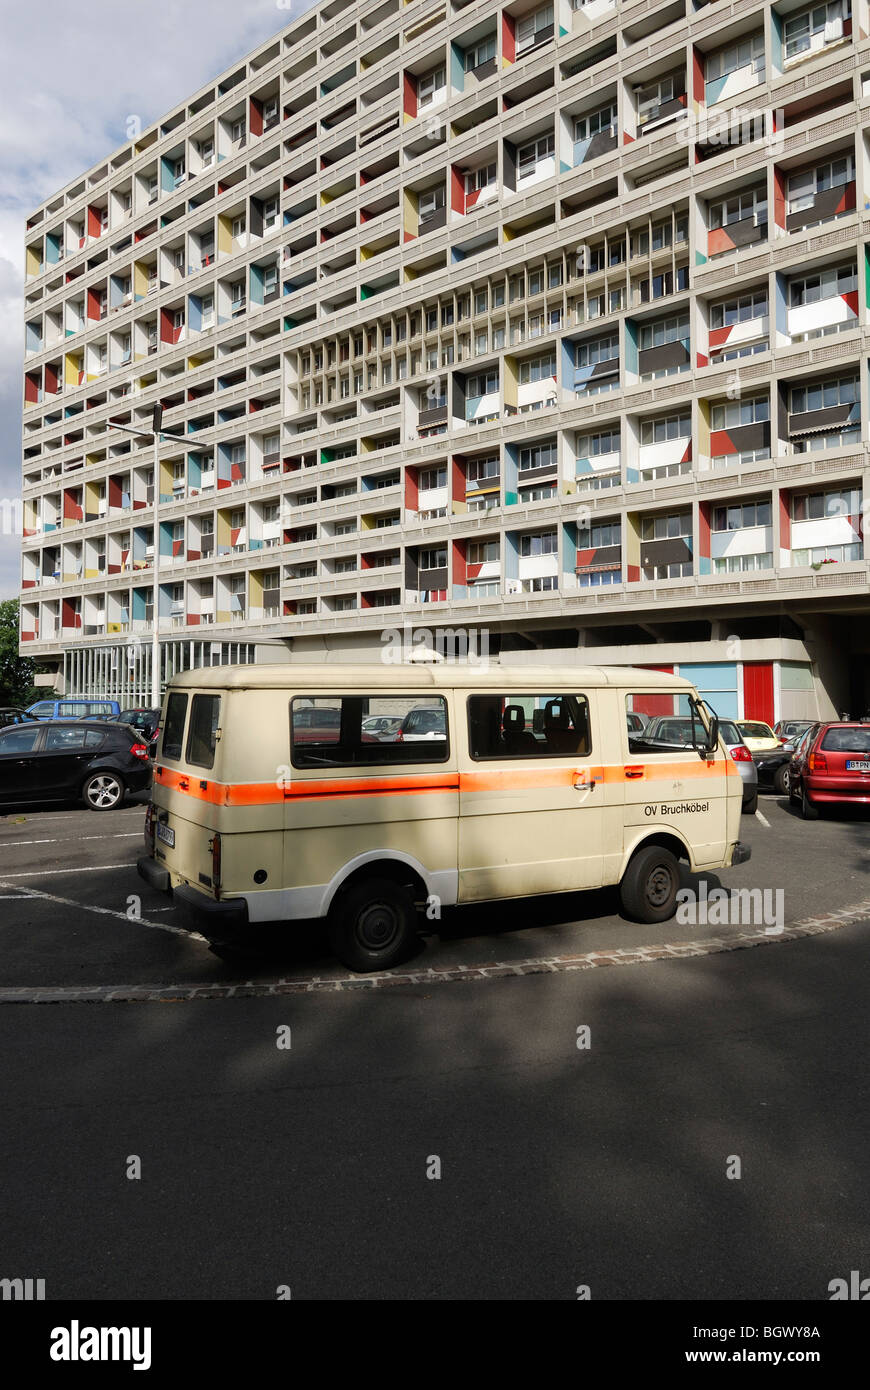 Berlin. Germany. Corbusier's Unite d'habitation. Stock Photo